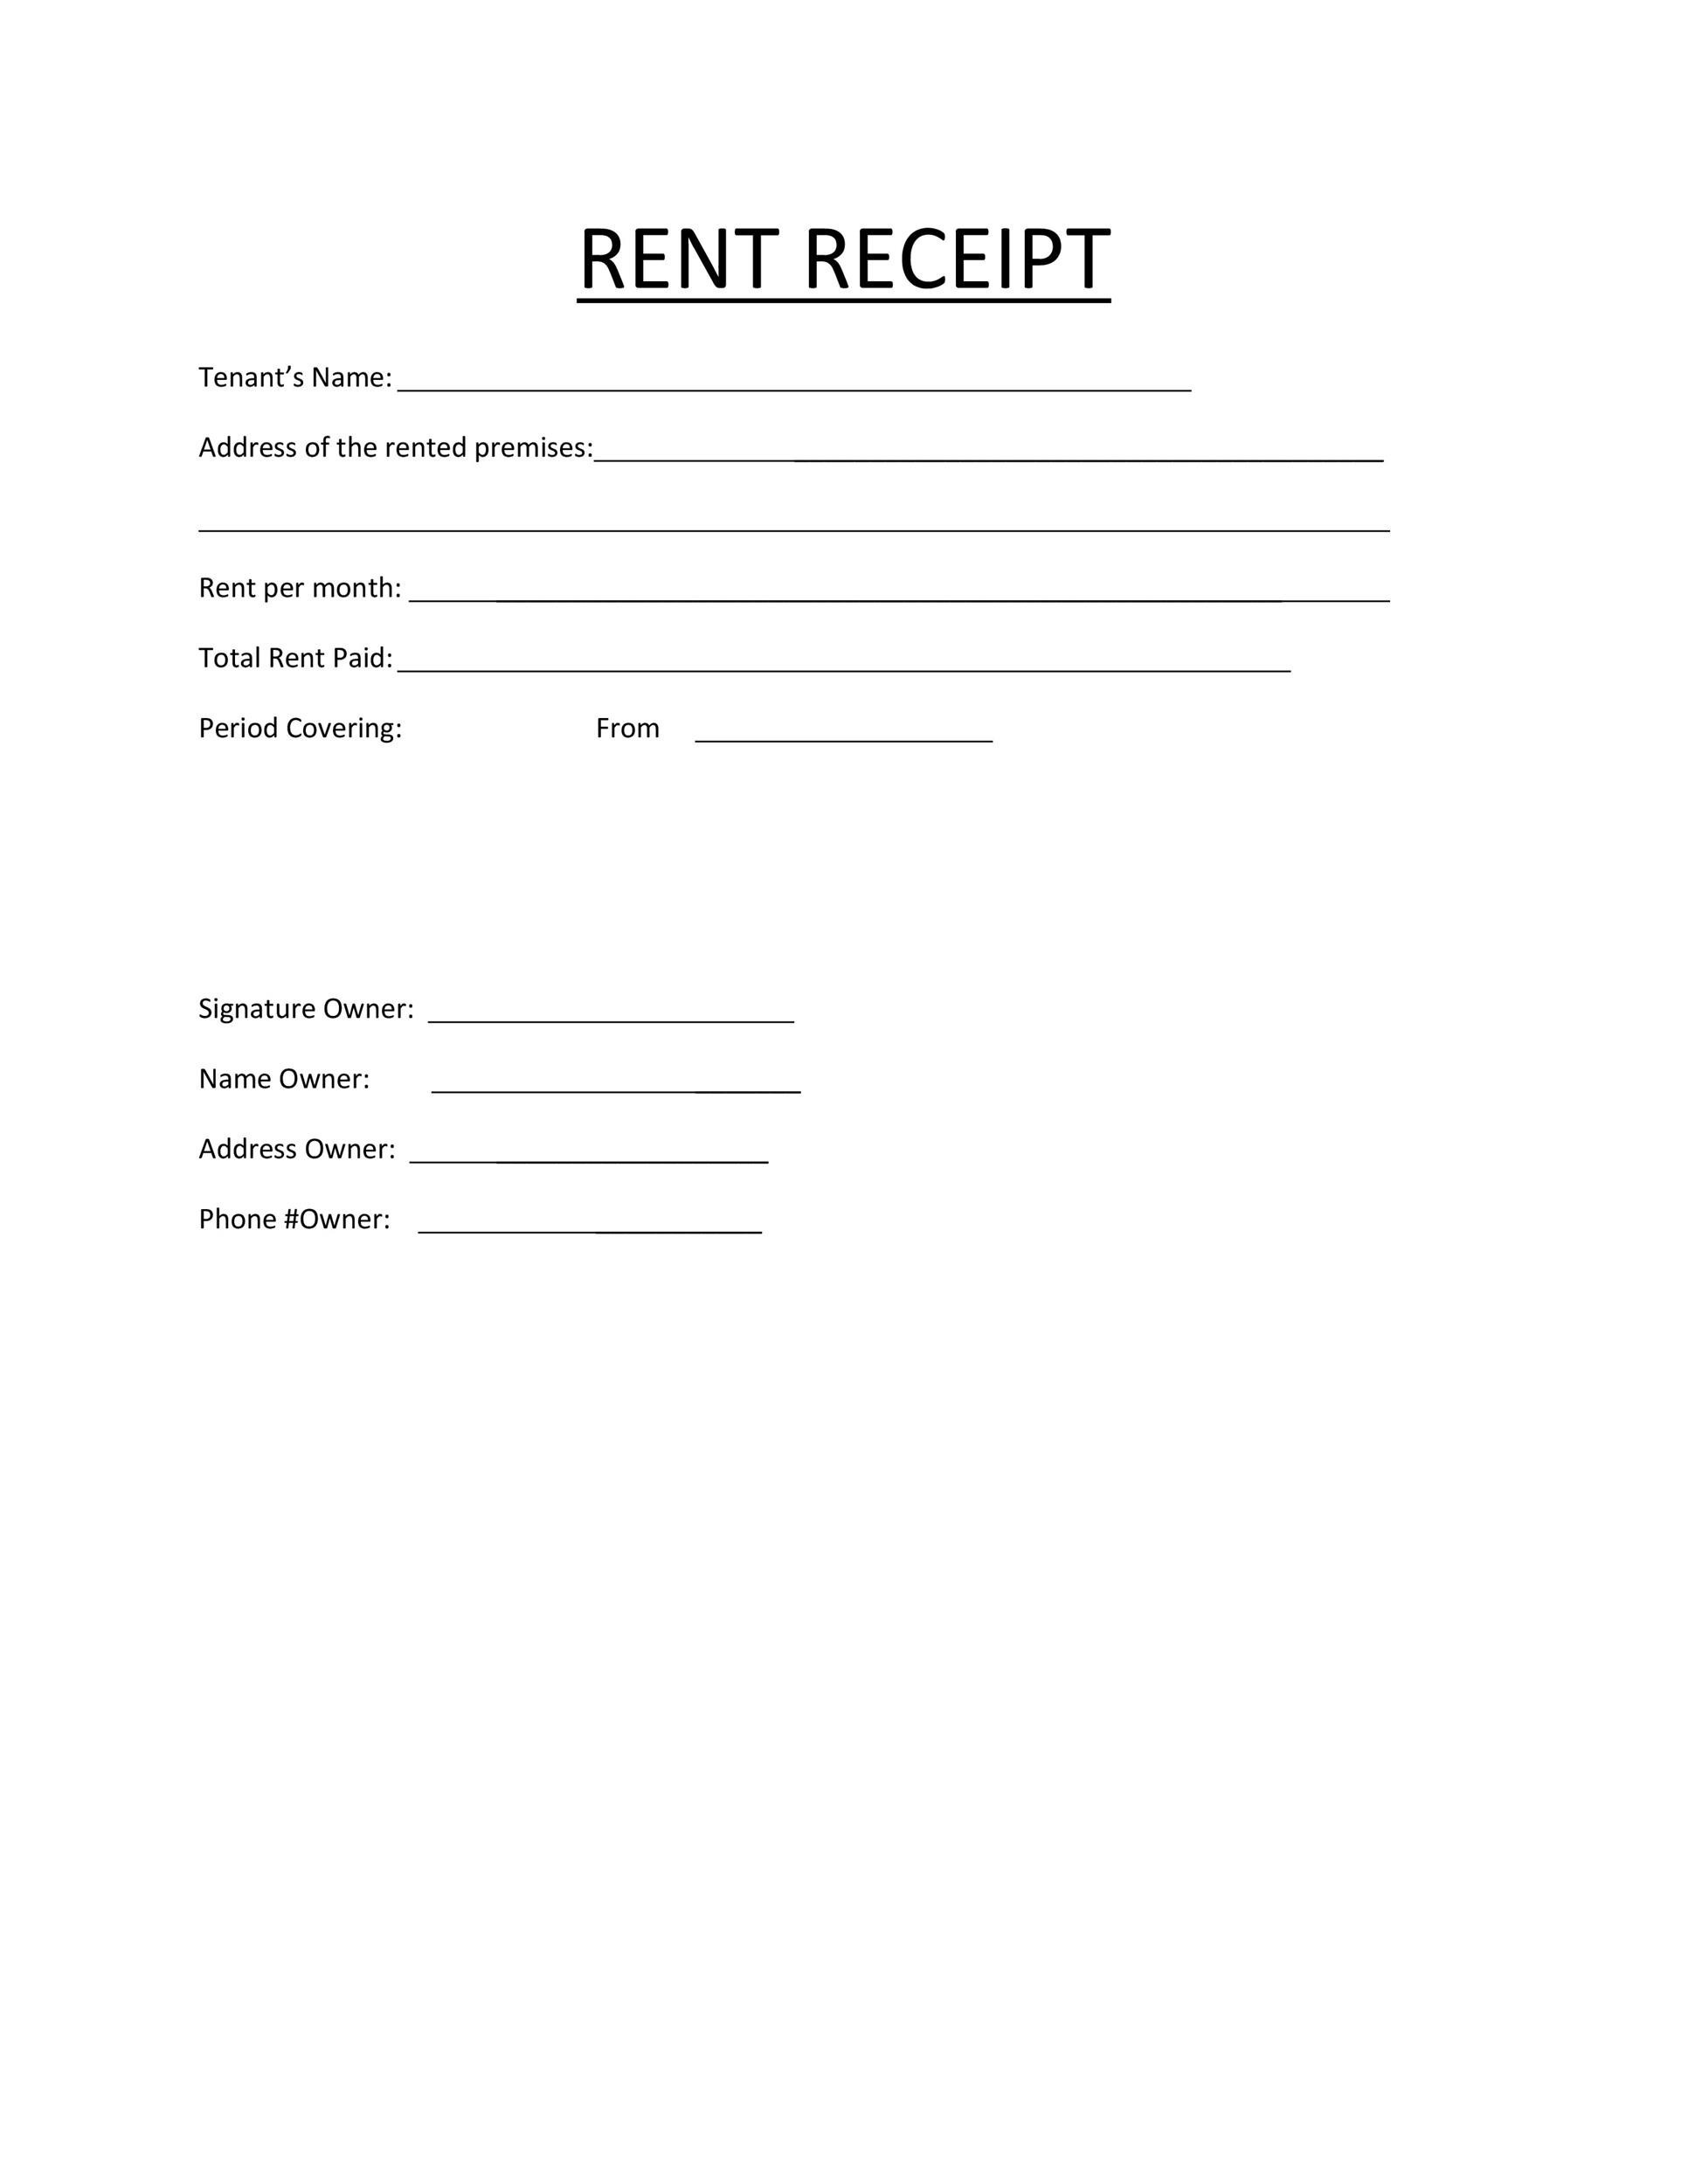 printable-cash-receipt-template-free-printable-templates-free